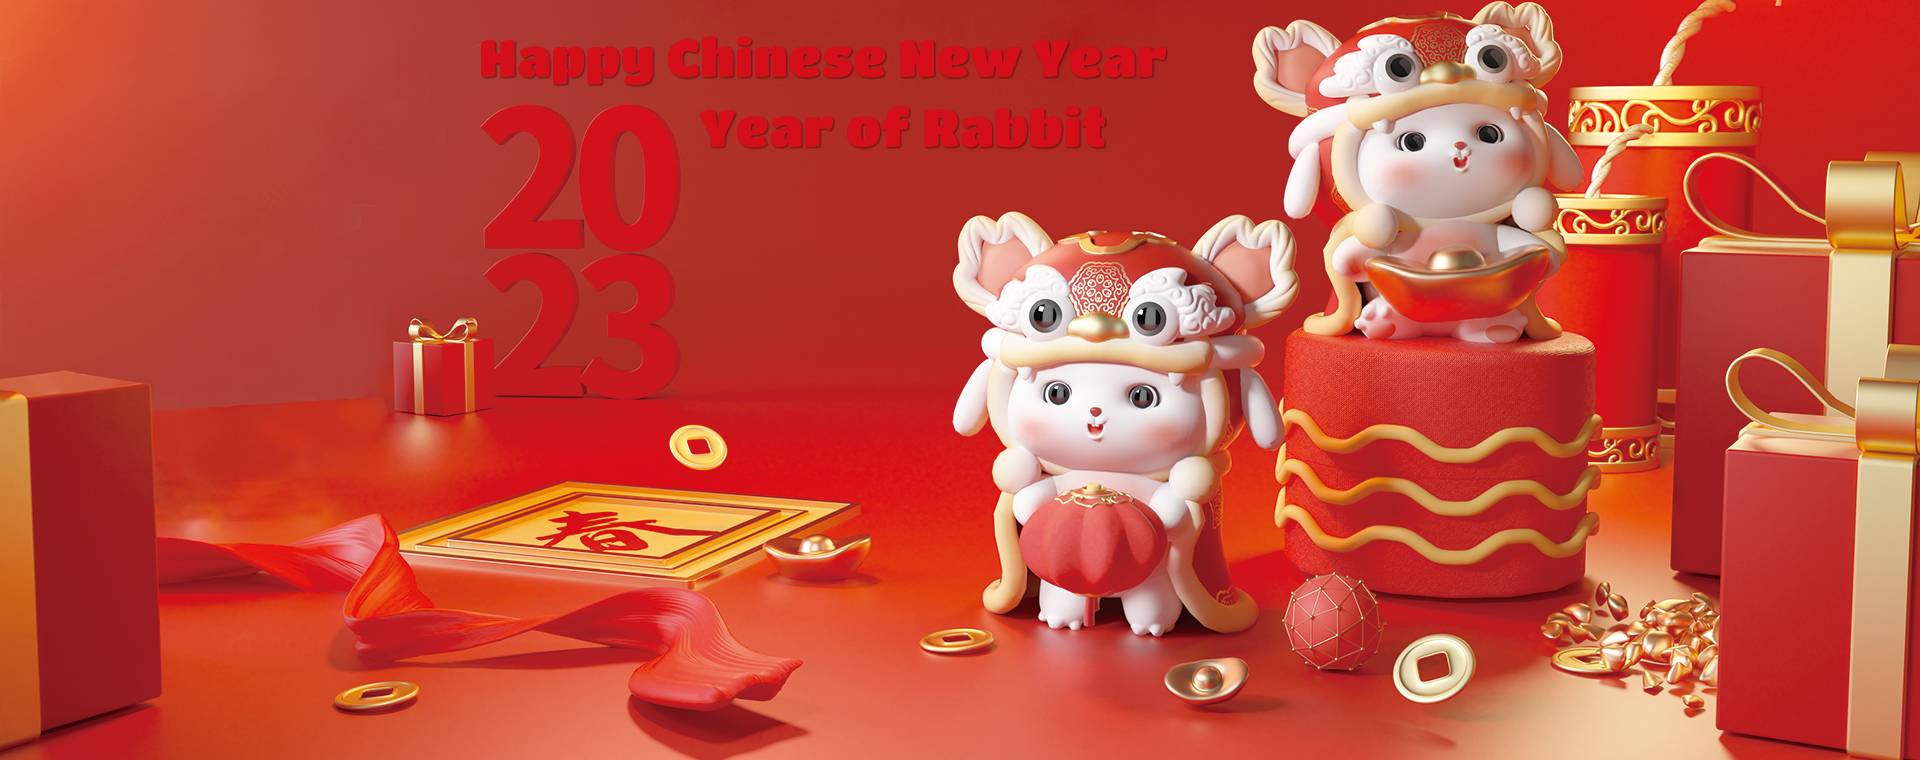 Happy Chinese New Year, Year of Rabbit